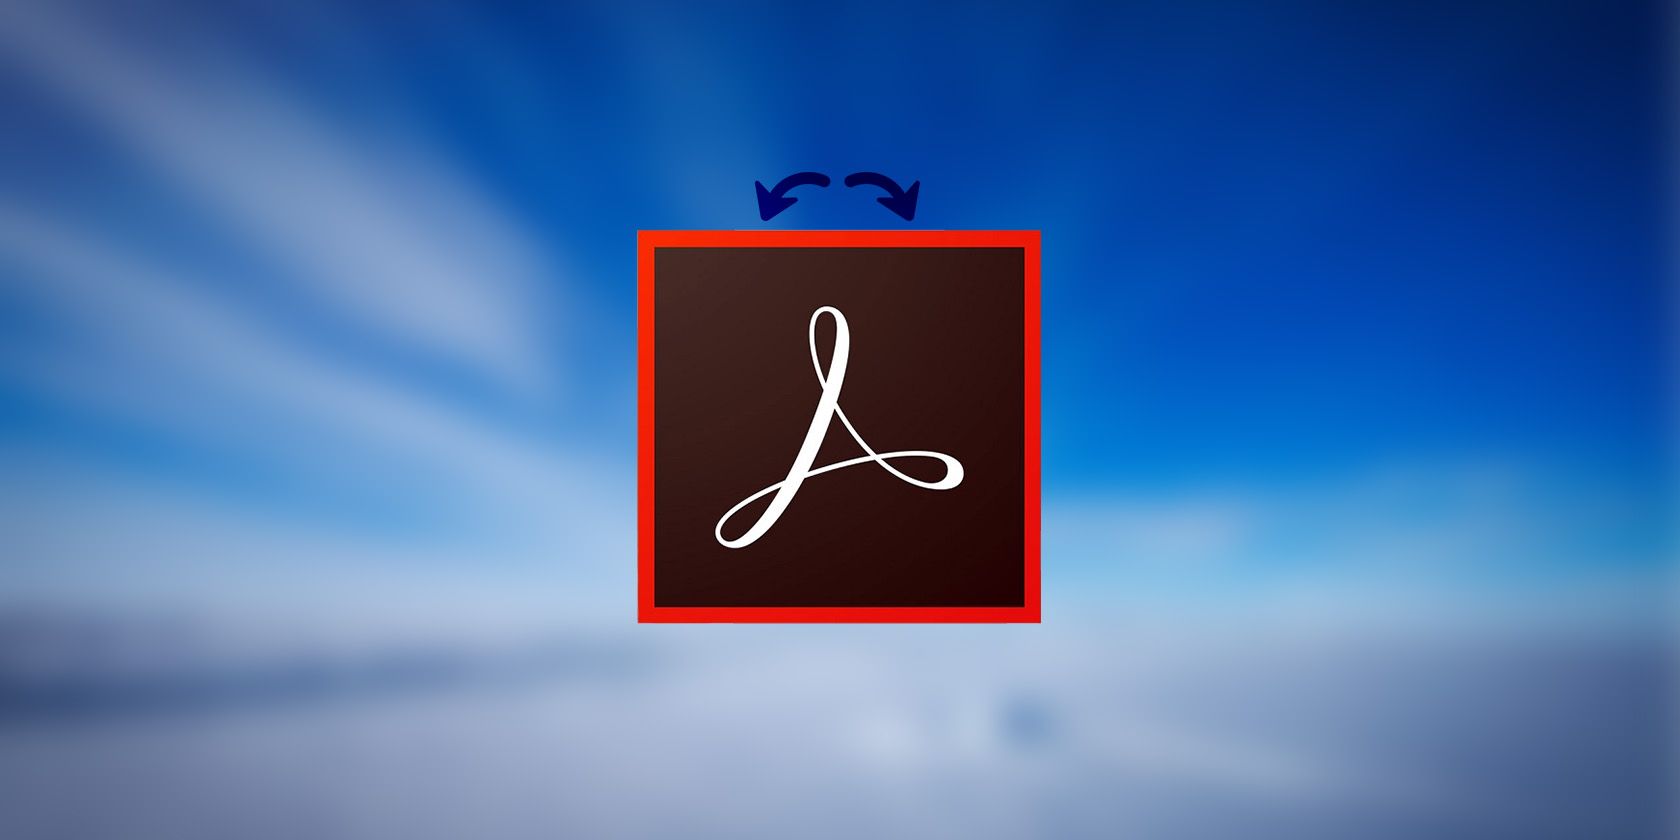 Adobe Acrobat logo on a background